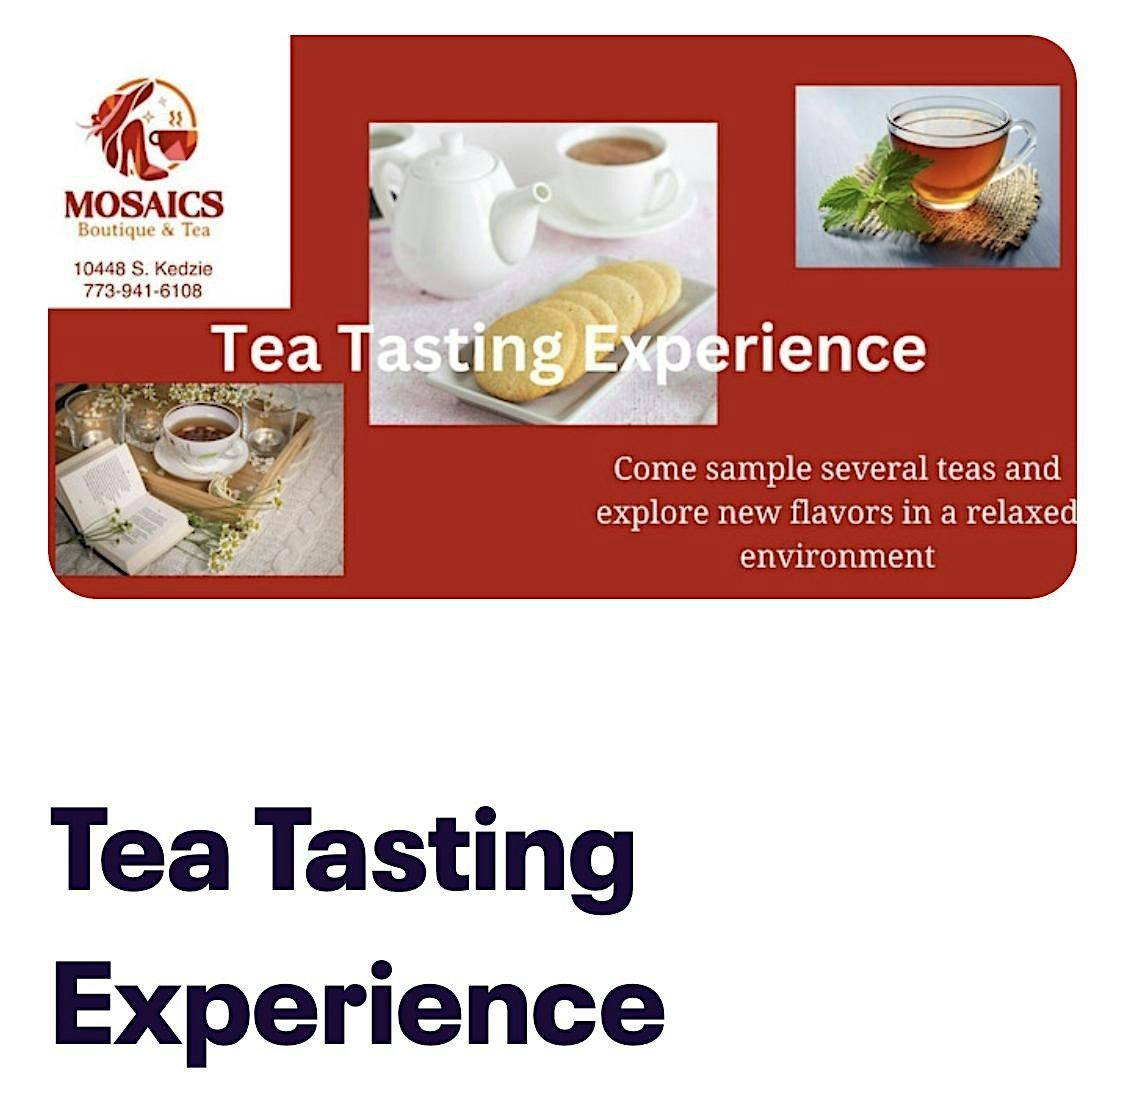 Tea Tasting Experience at Mosaics Boutique & Tea